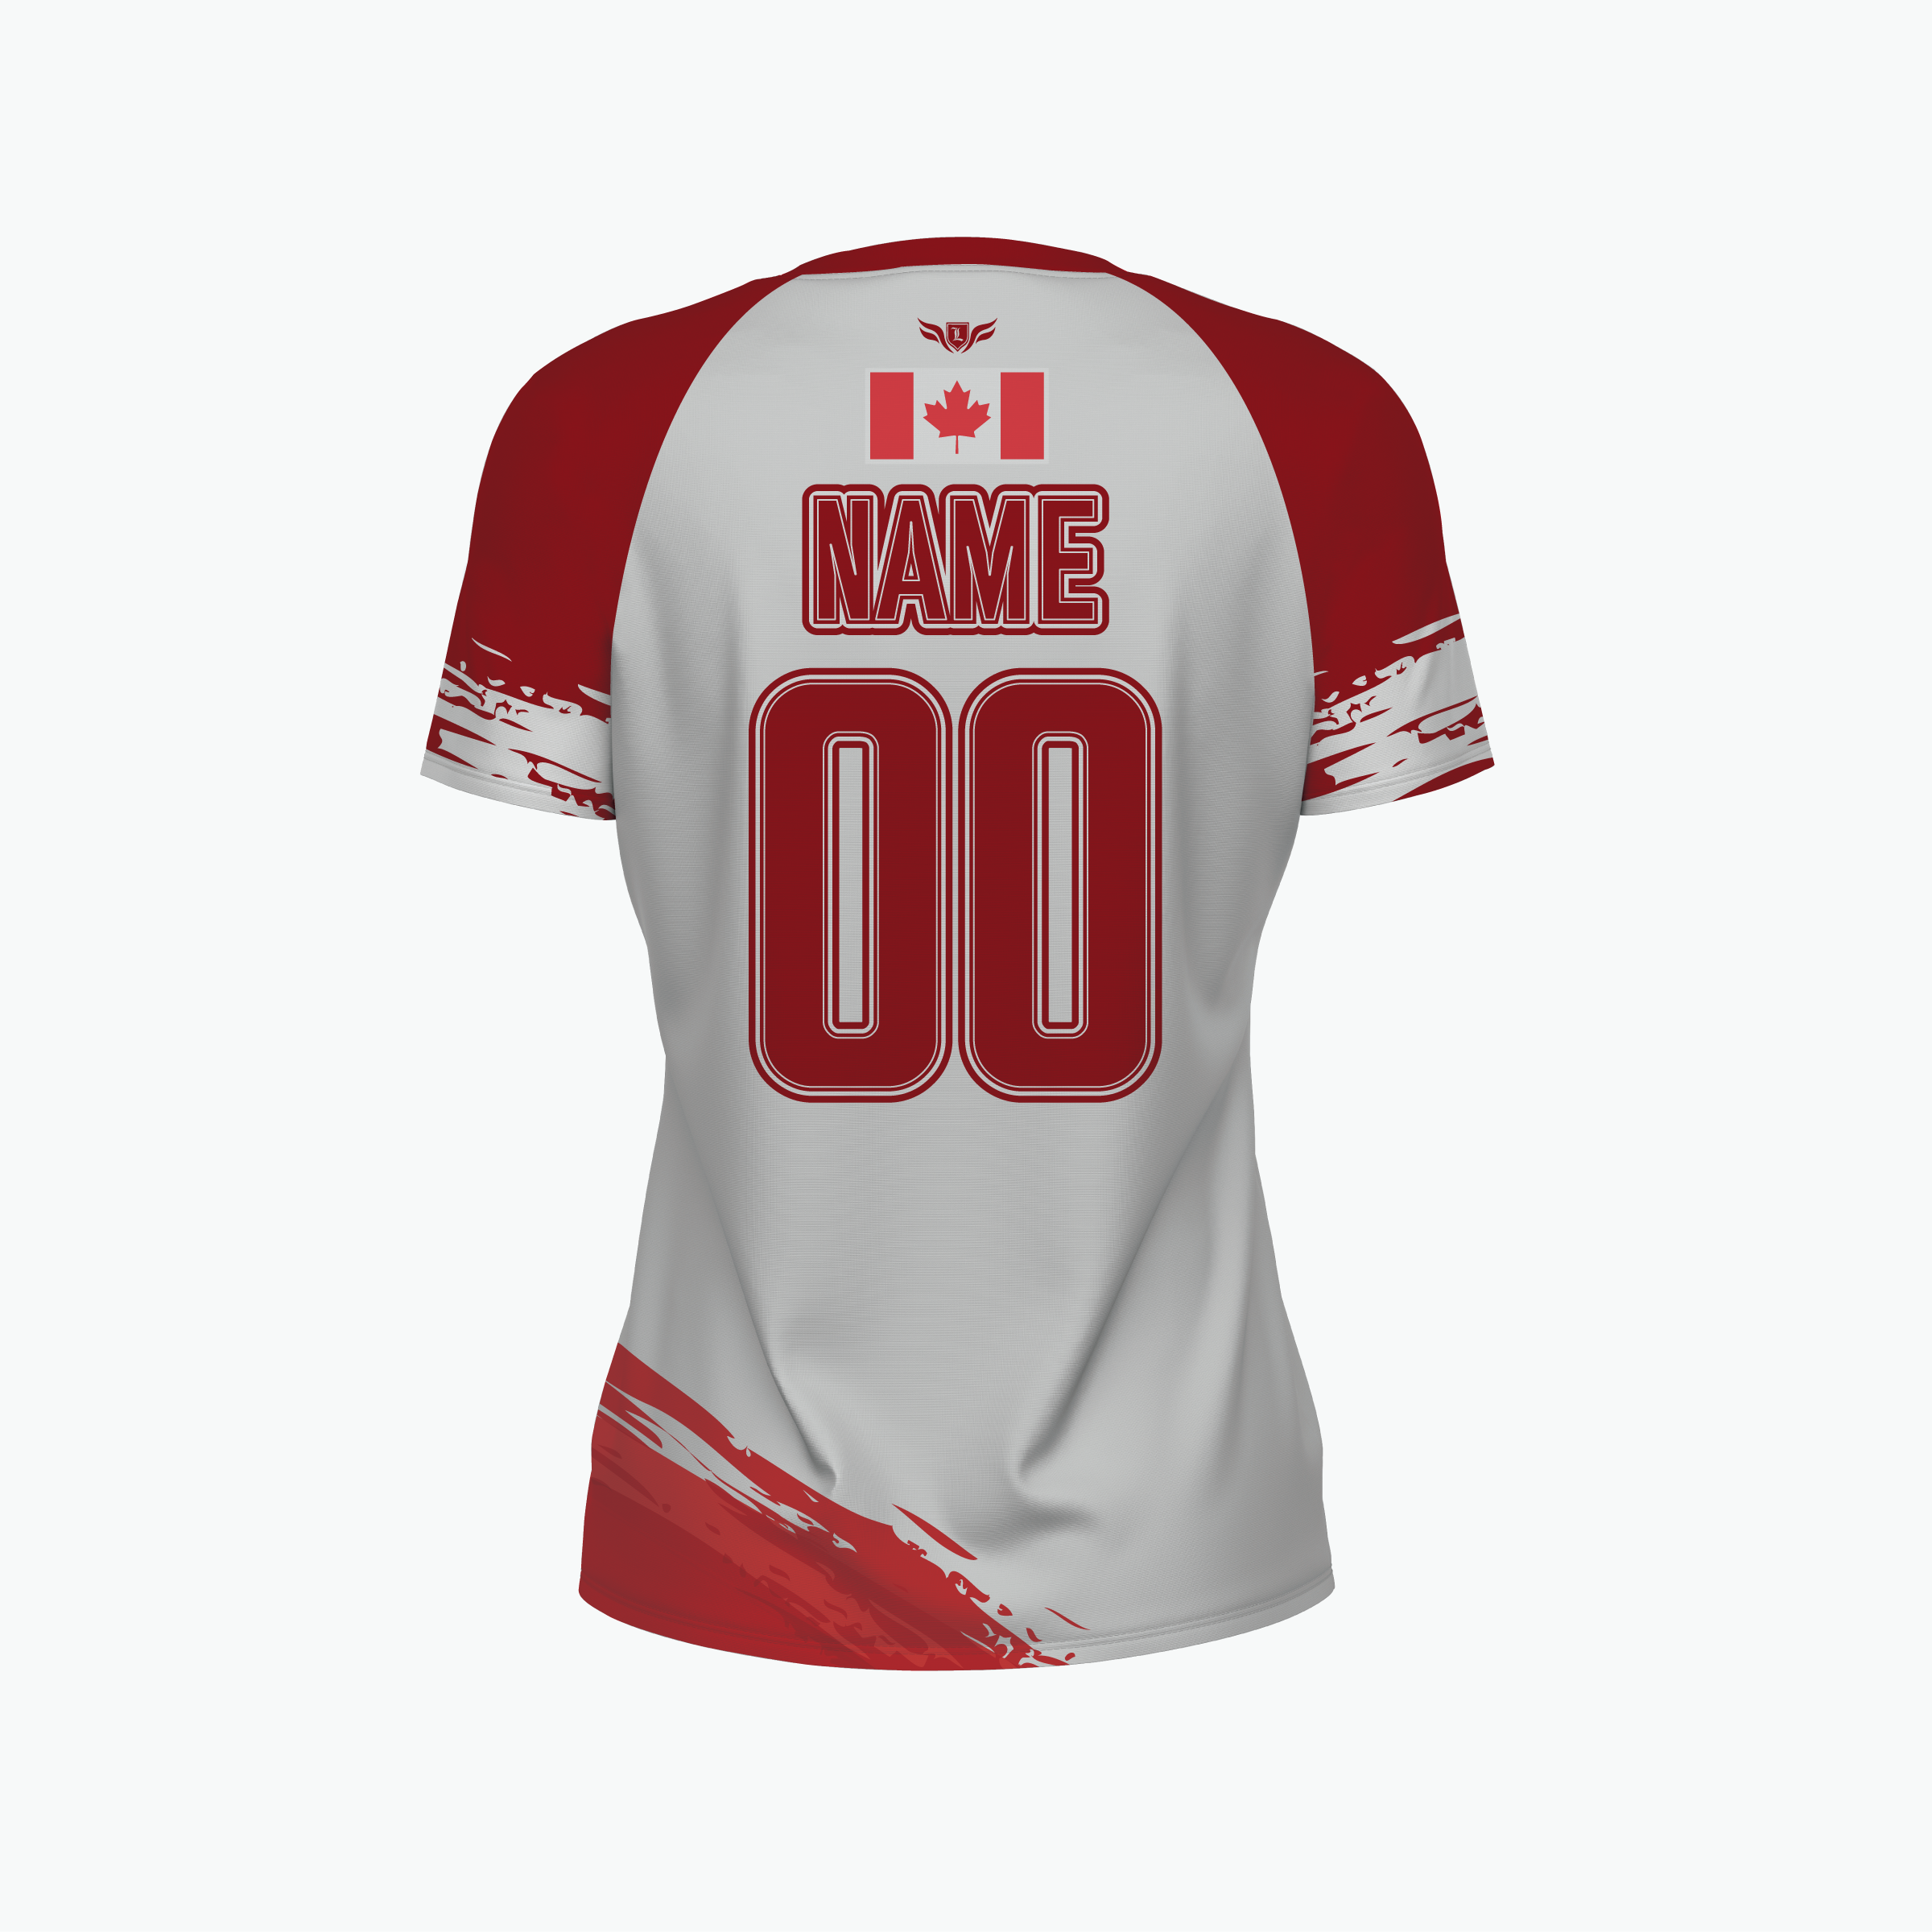 Canada 2021 Men's OCR Jersey – LegendBorne